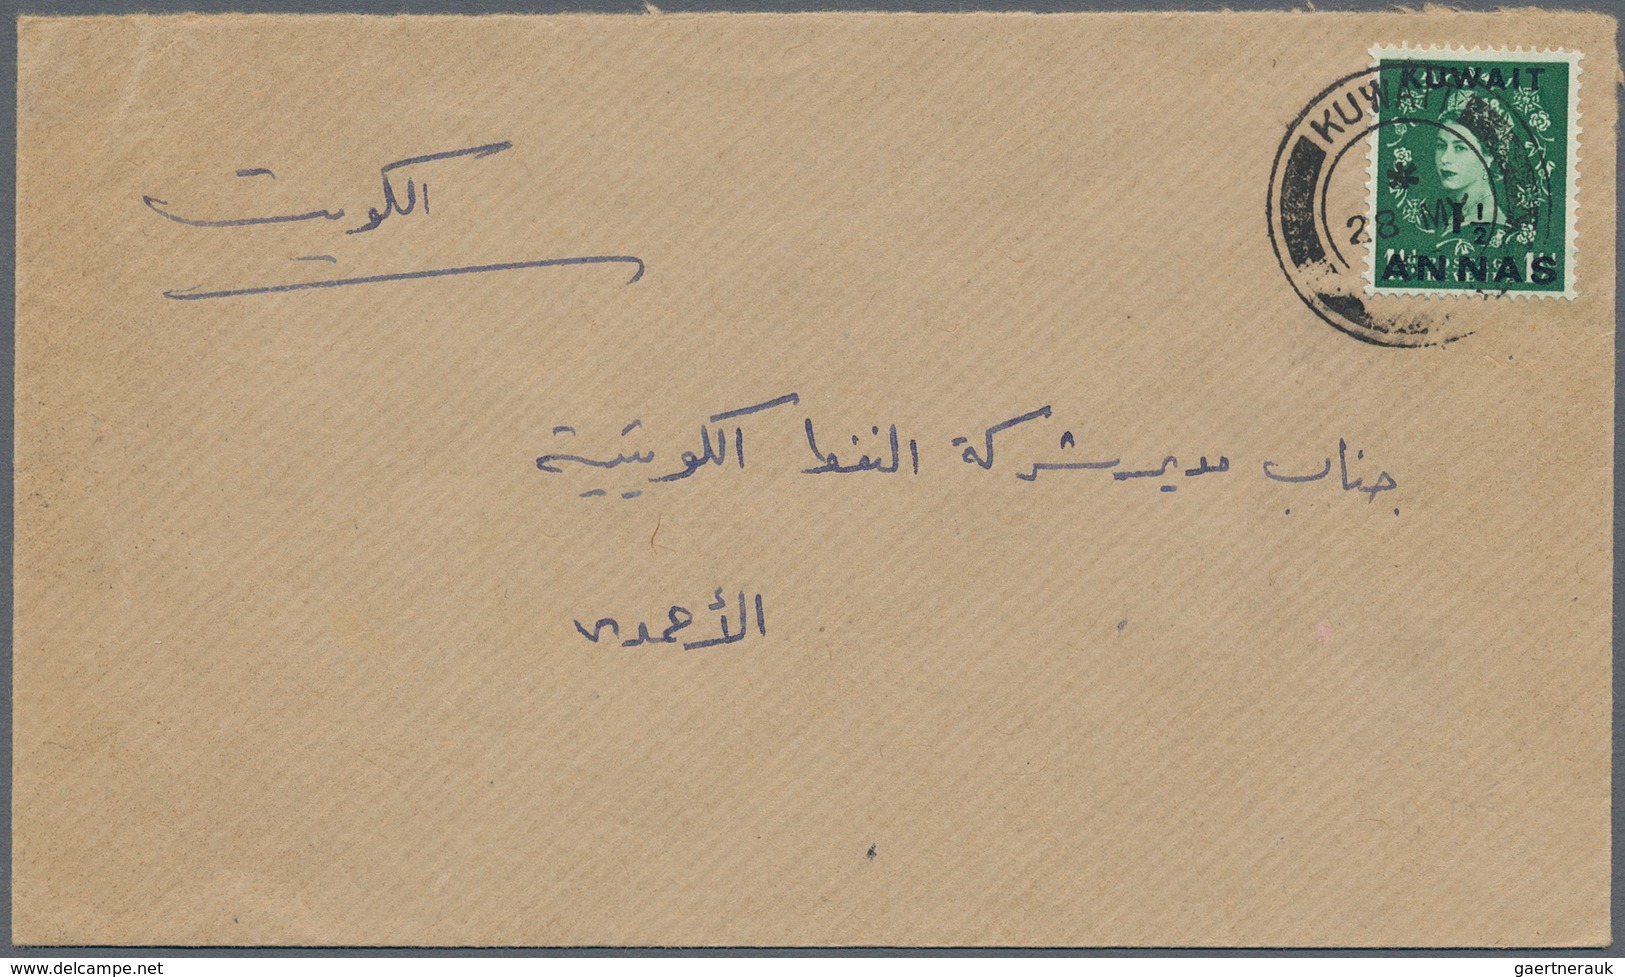 Asien: 1925/82 (ca.), Near East inc. Gulf states, Lebanon, Syria, Iraq (inc. 1942 red halfmoon and 1